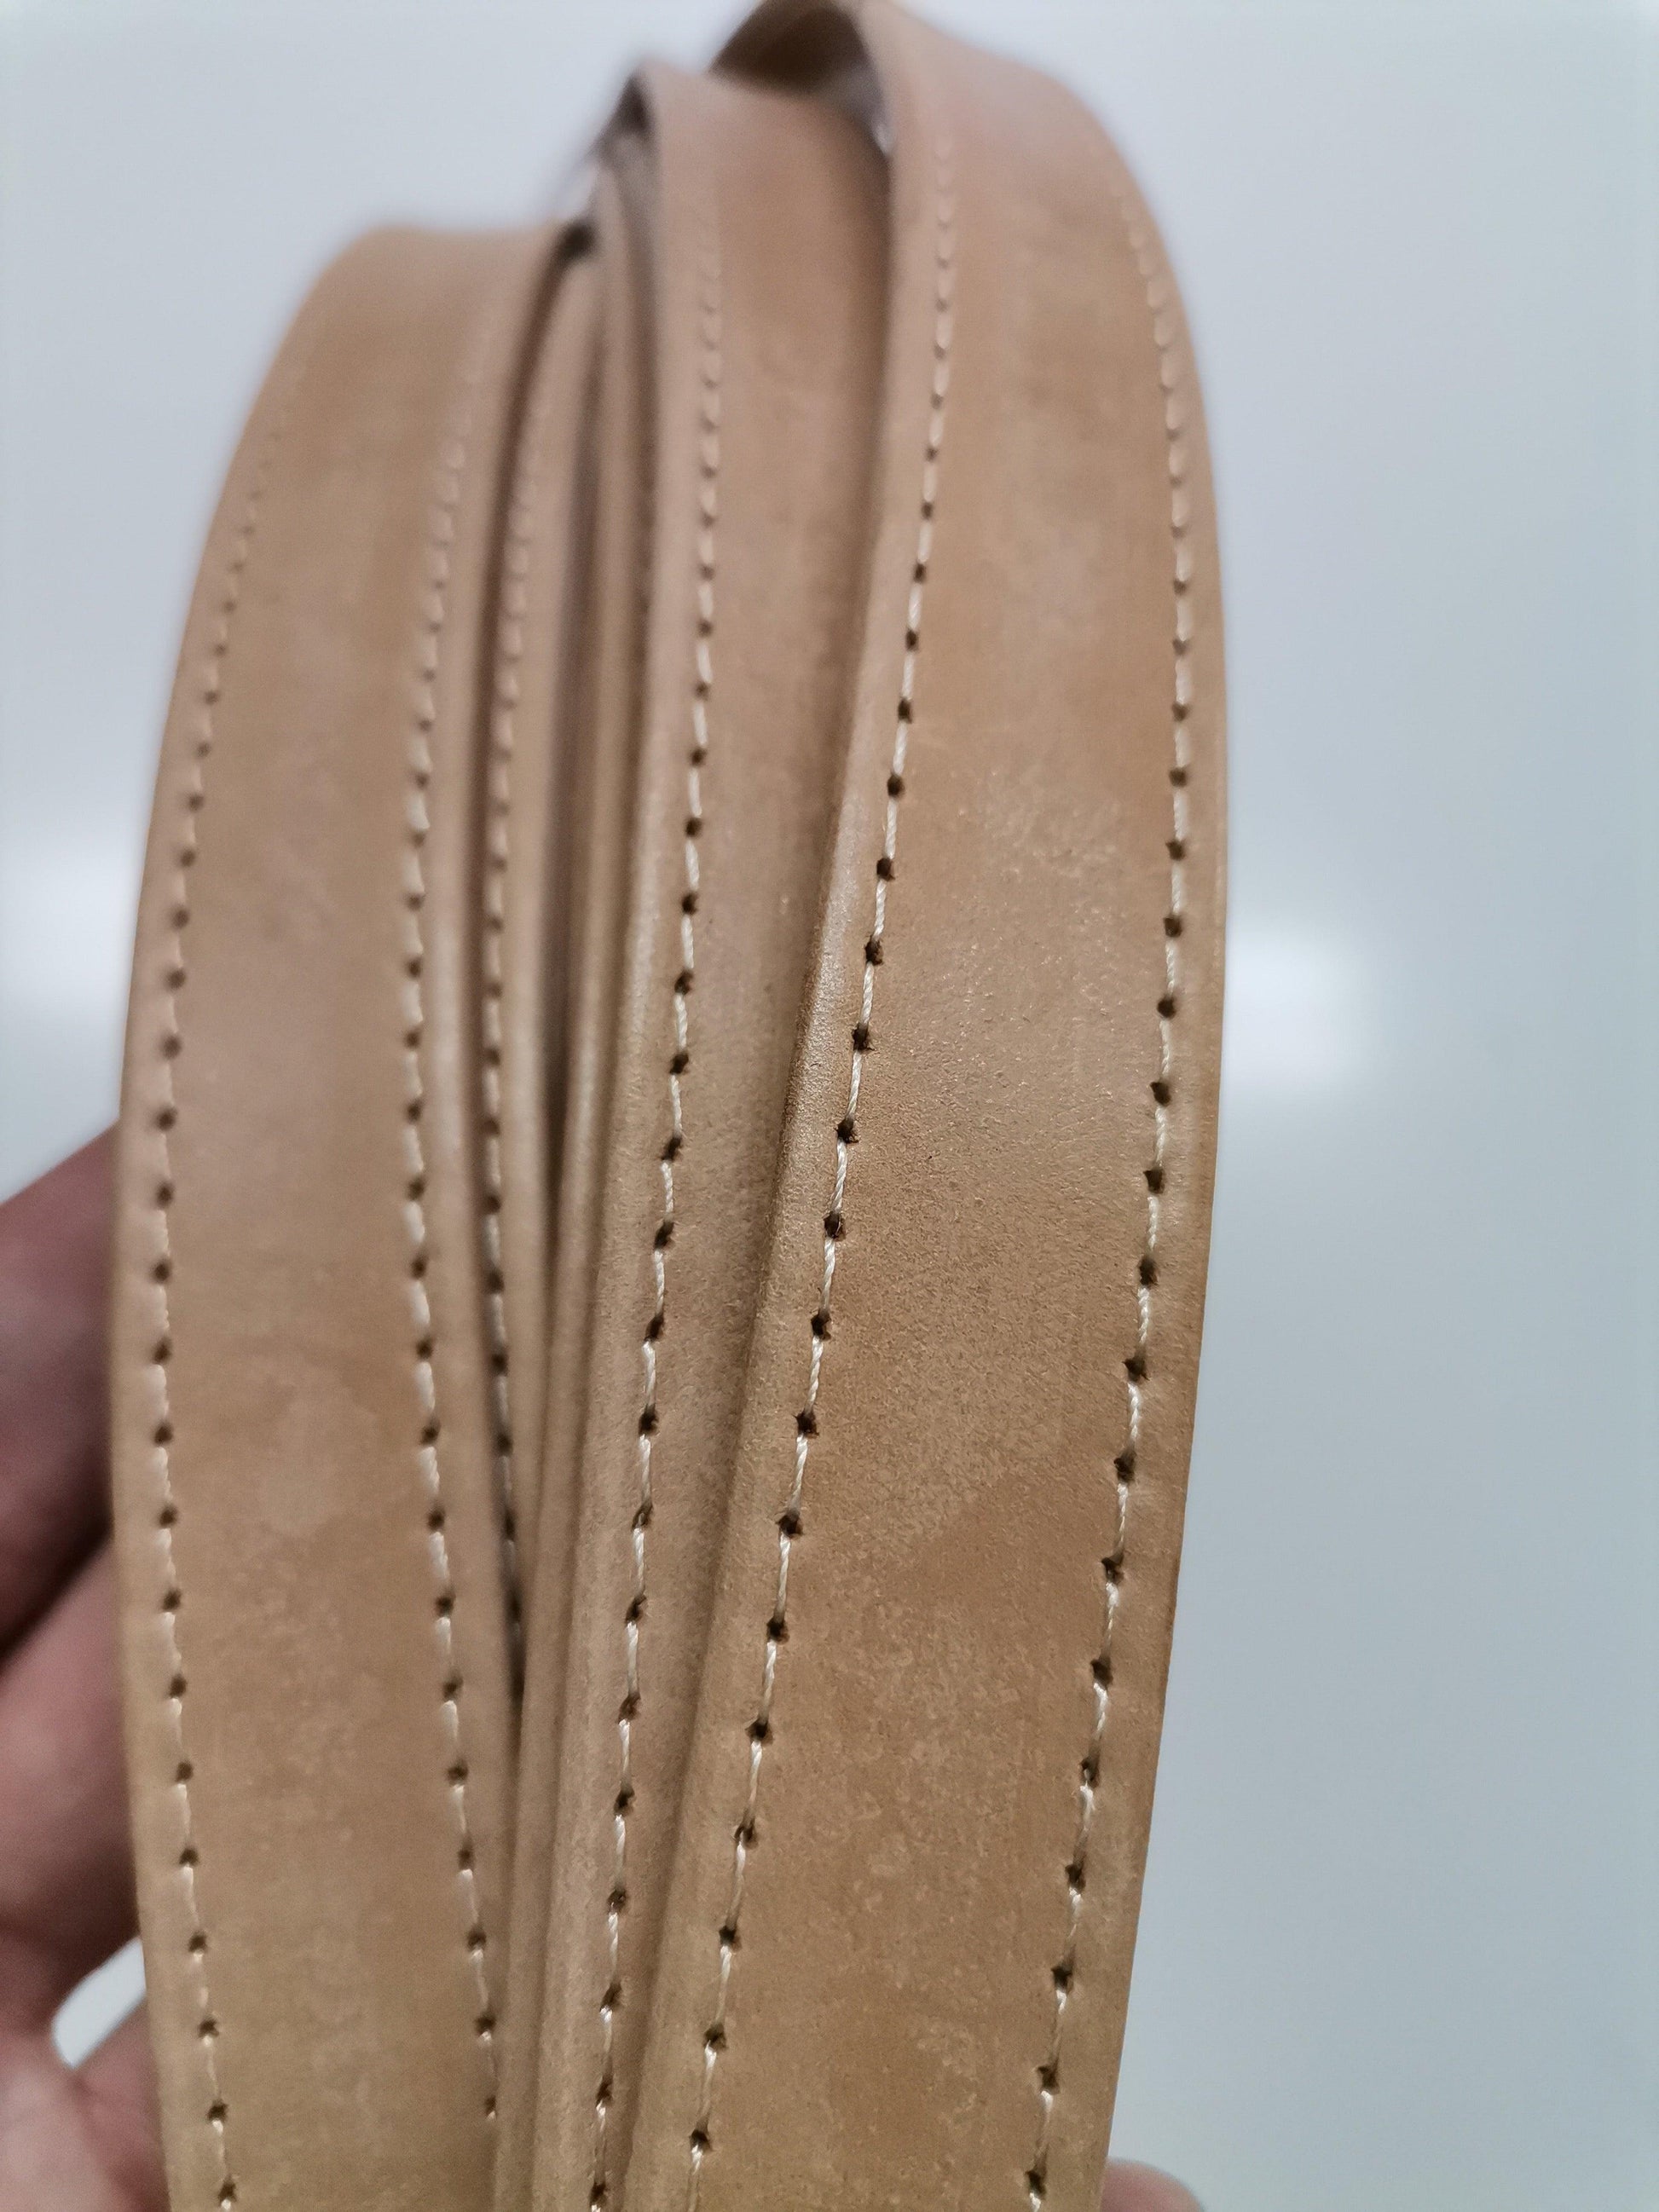 2cm Width Handbag Strap Genuine Vachetta Leather 